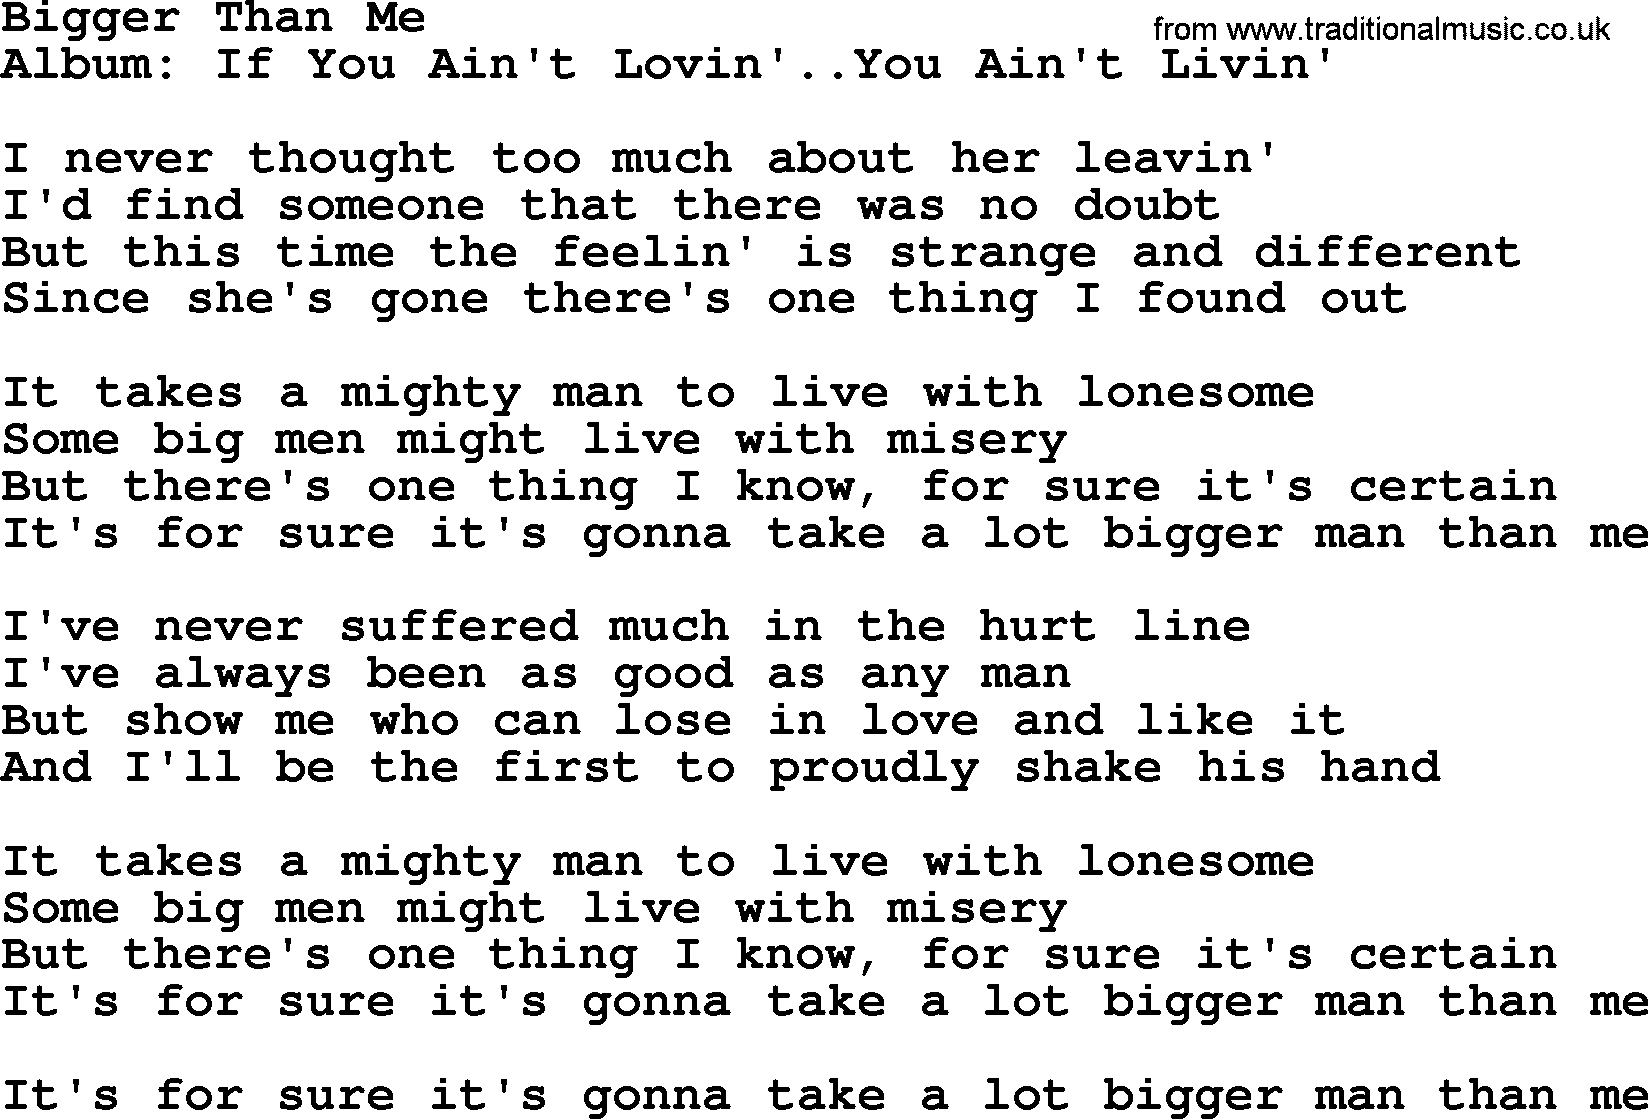 George Strait song: Bigger Than Me, lyrics